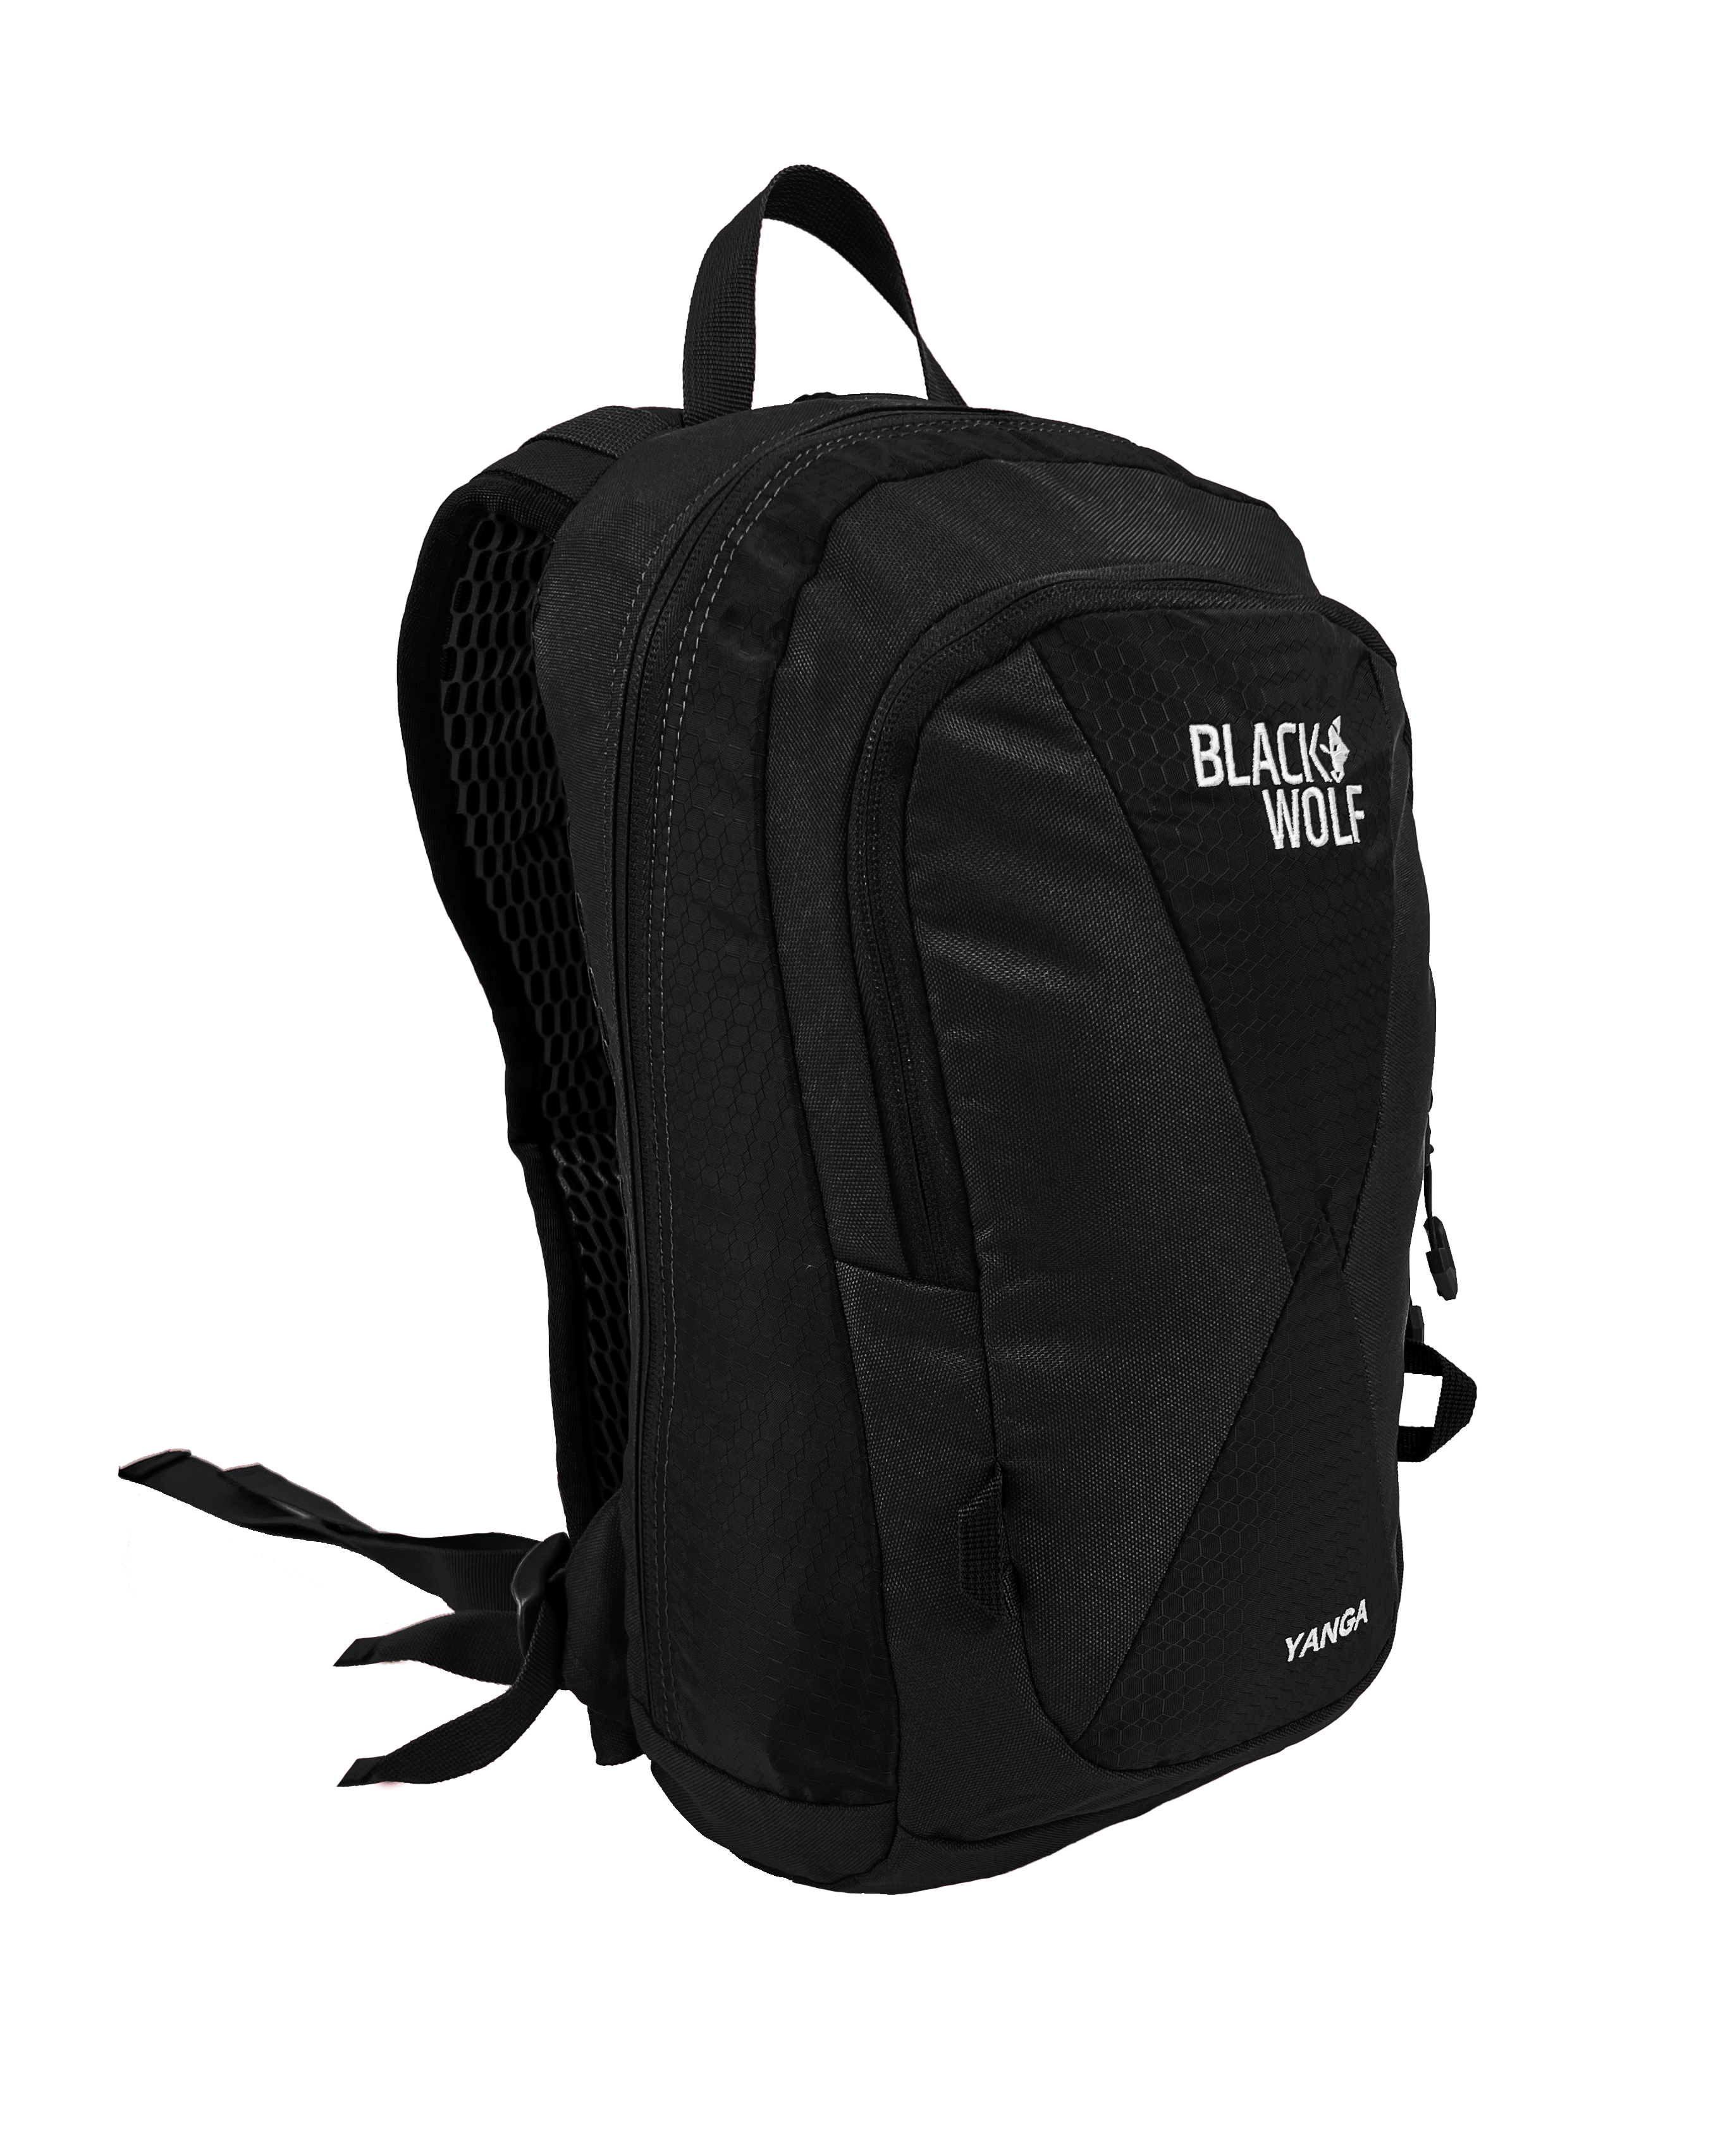 Black Wolf - Yanga 13L Backpack - Jet Black